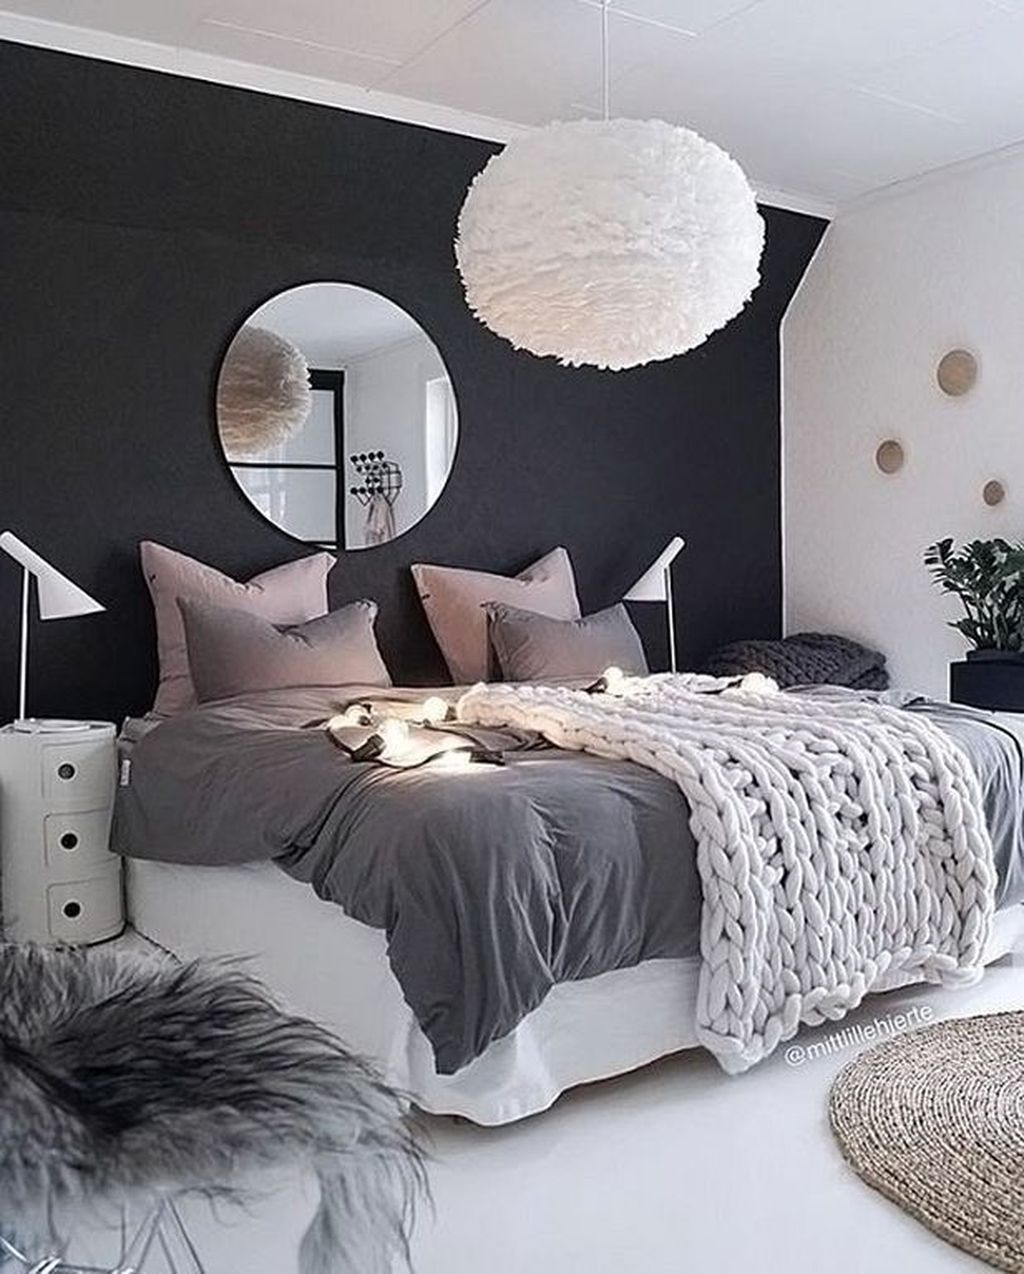 bedroom decor ideas for teens